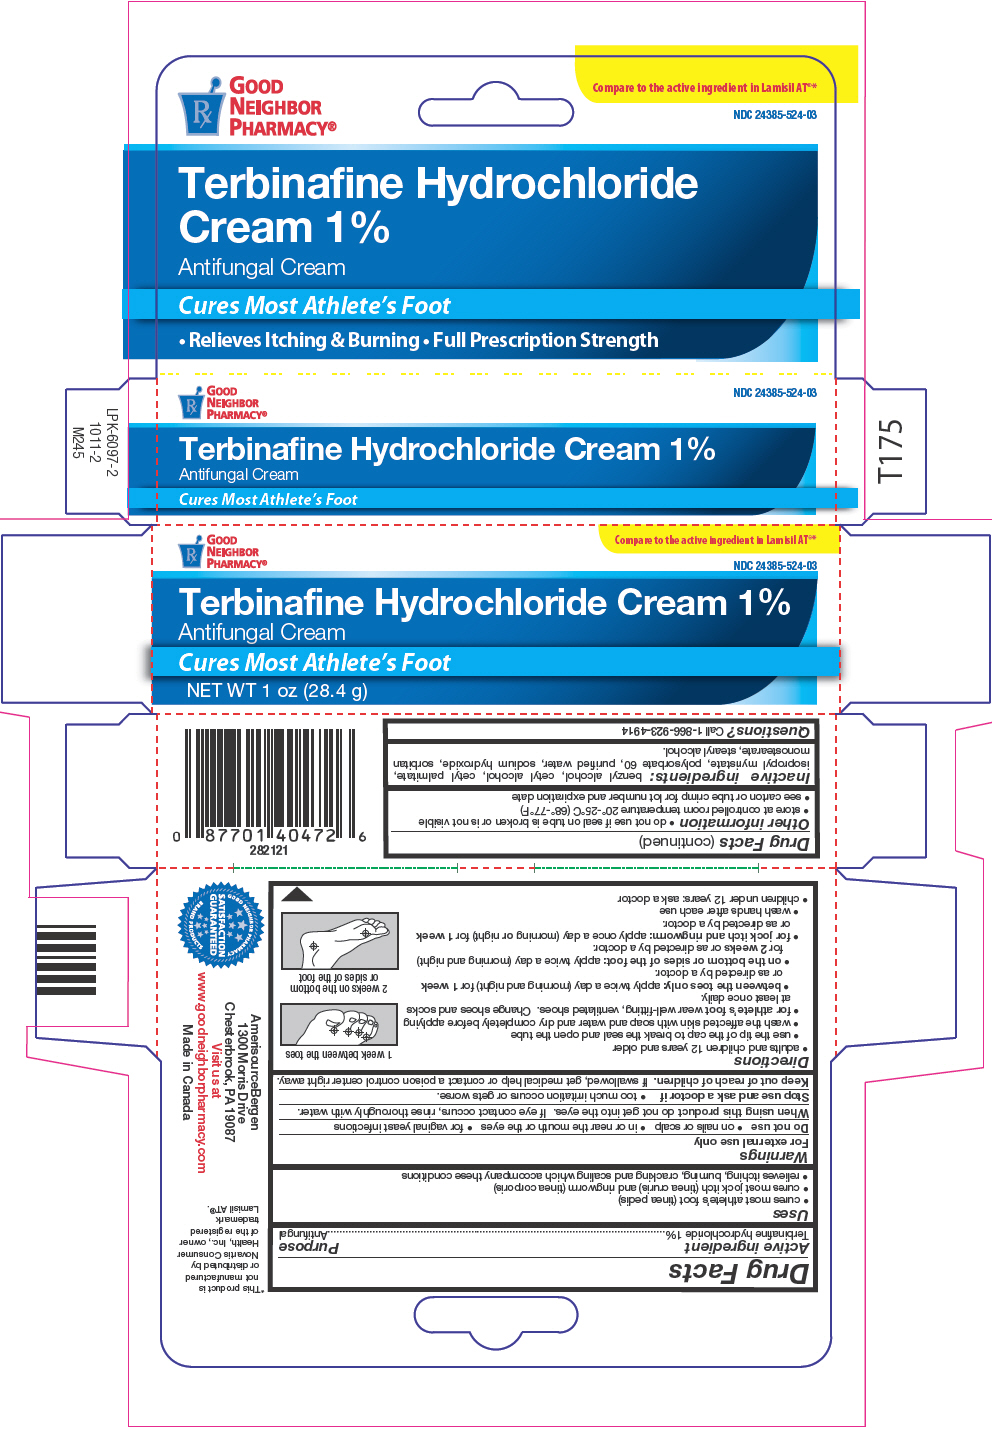 Good Neighbor Pharmacy (Terbinafine Hydrochloride) Cream [Amerisourcebergen]